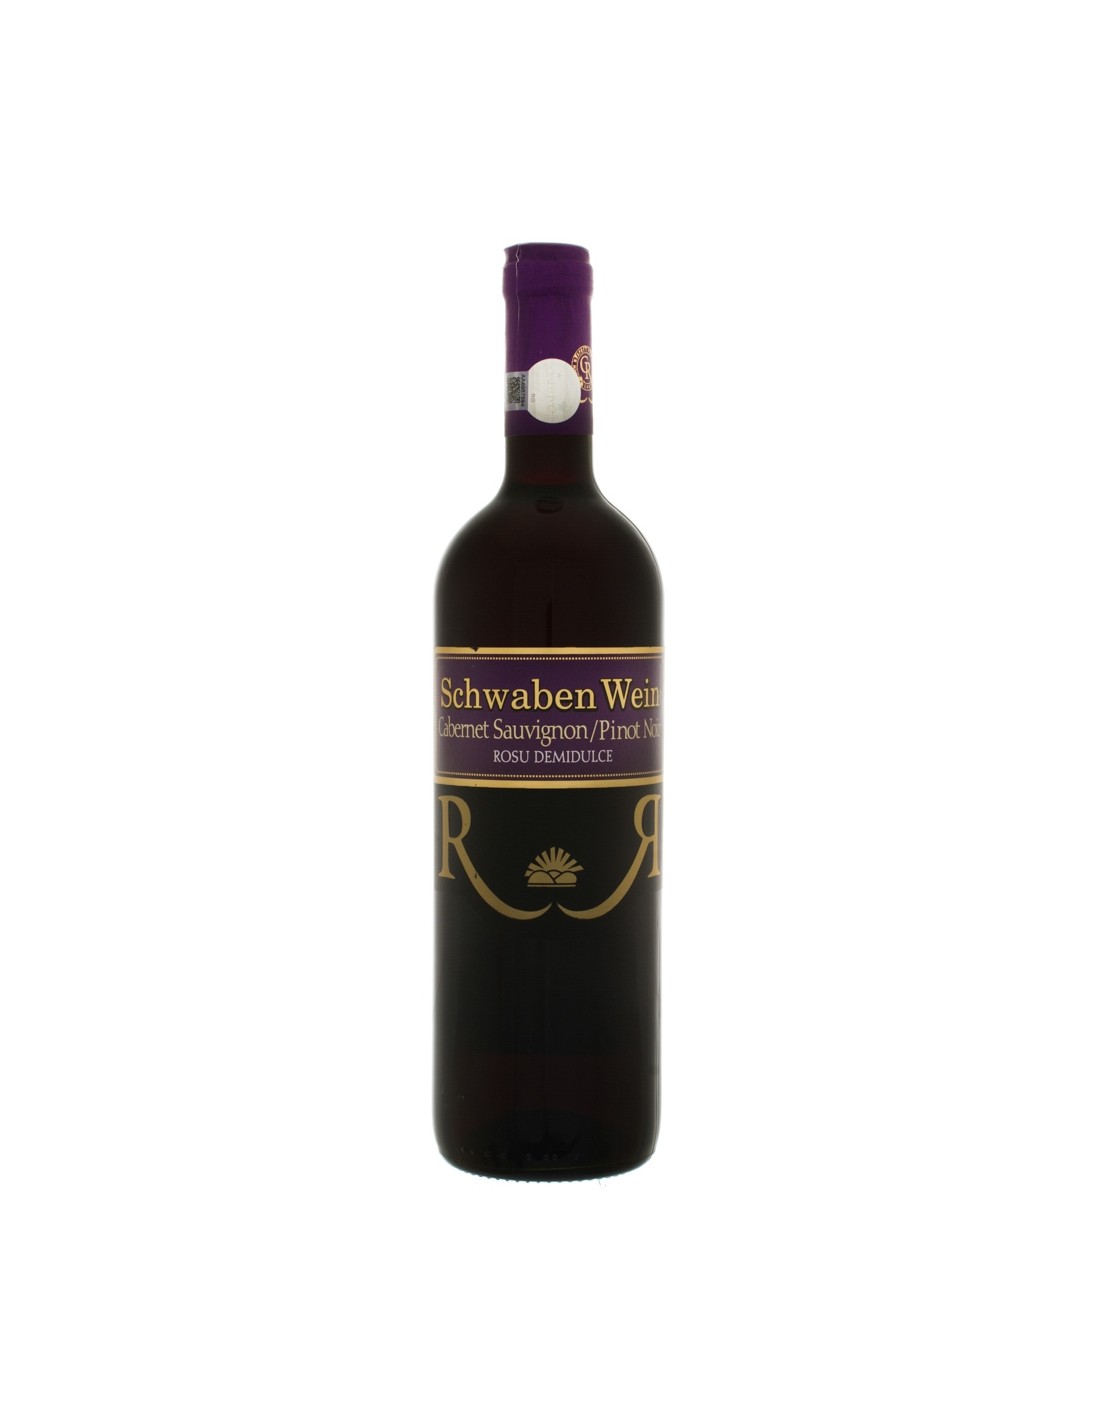 Vin rosu demidulce, Cupaj, Schwaben Wein Recas, 0.75L, 12.5% alc., Romania